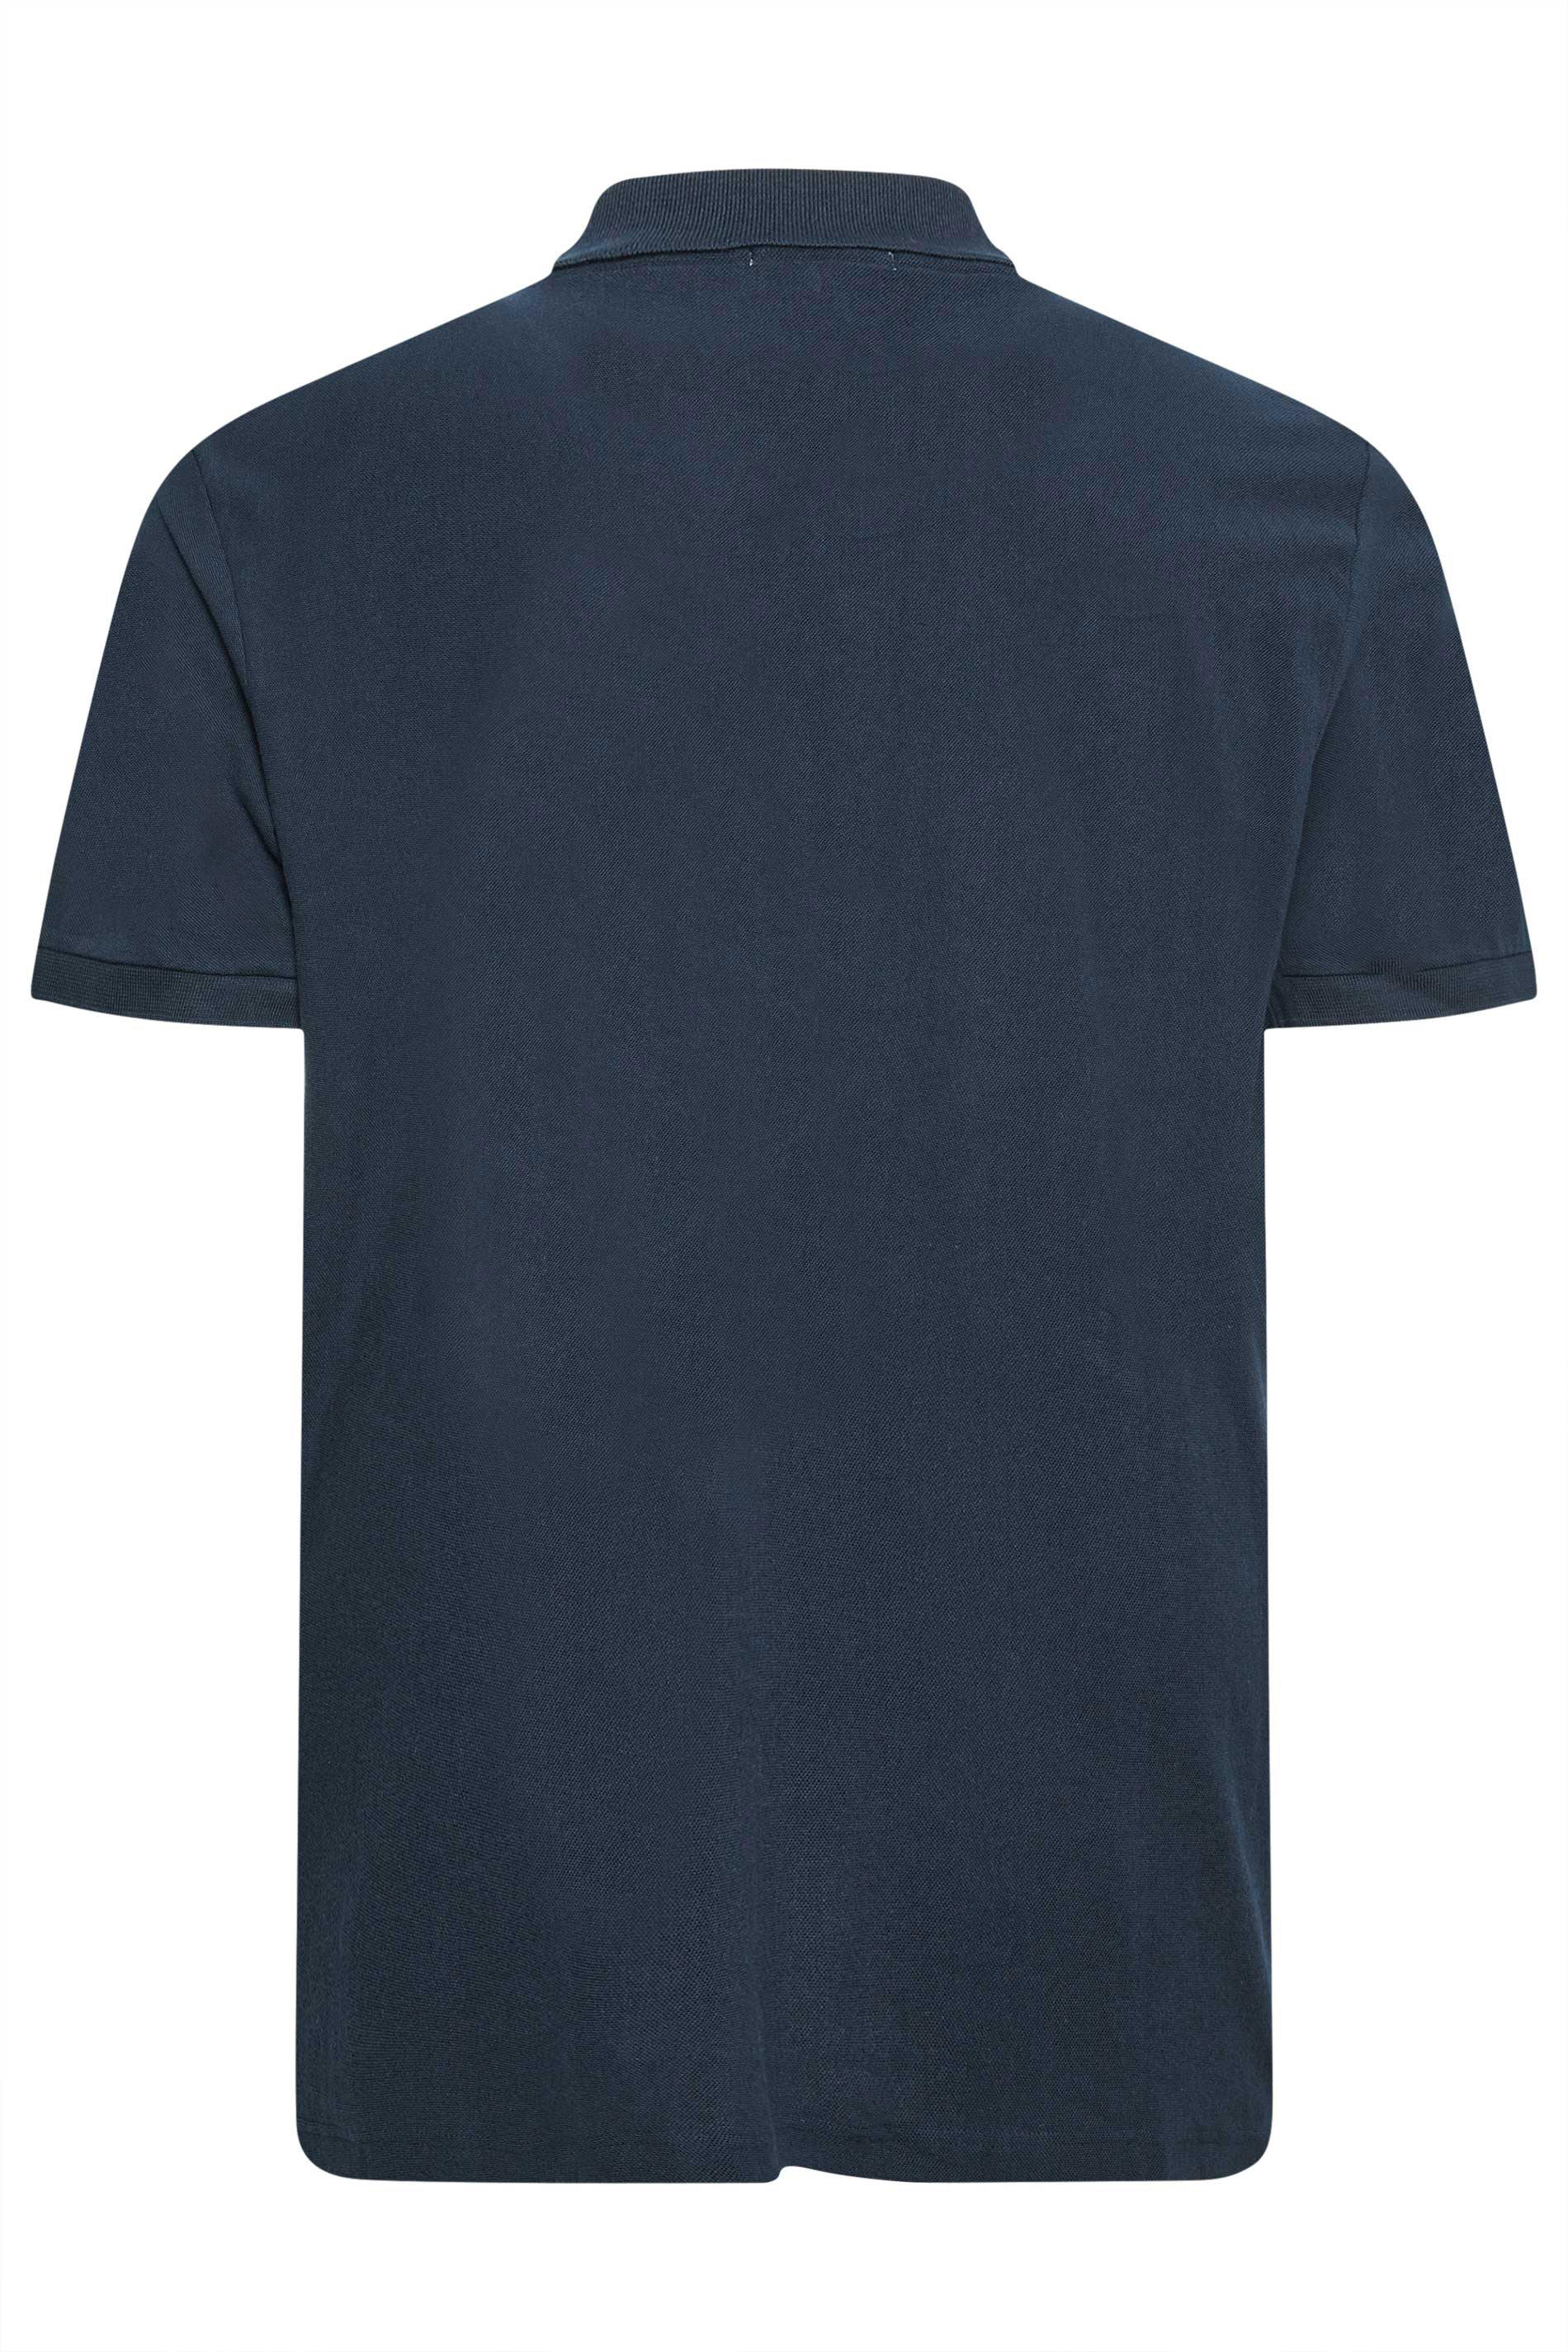 BEN SHERMAN Big & Tall Navy Blue Stripe Mod Polo Shirt | BadRhino 3